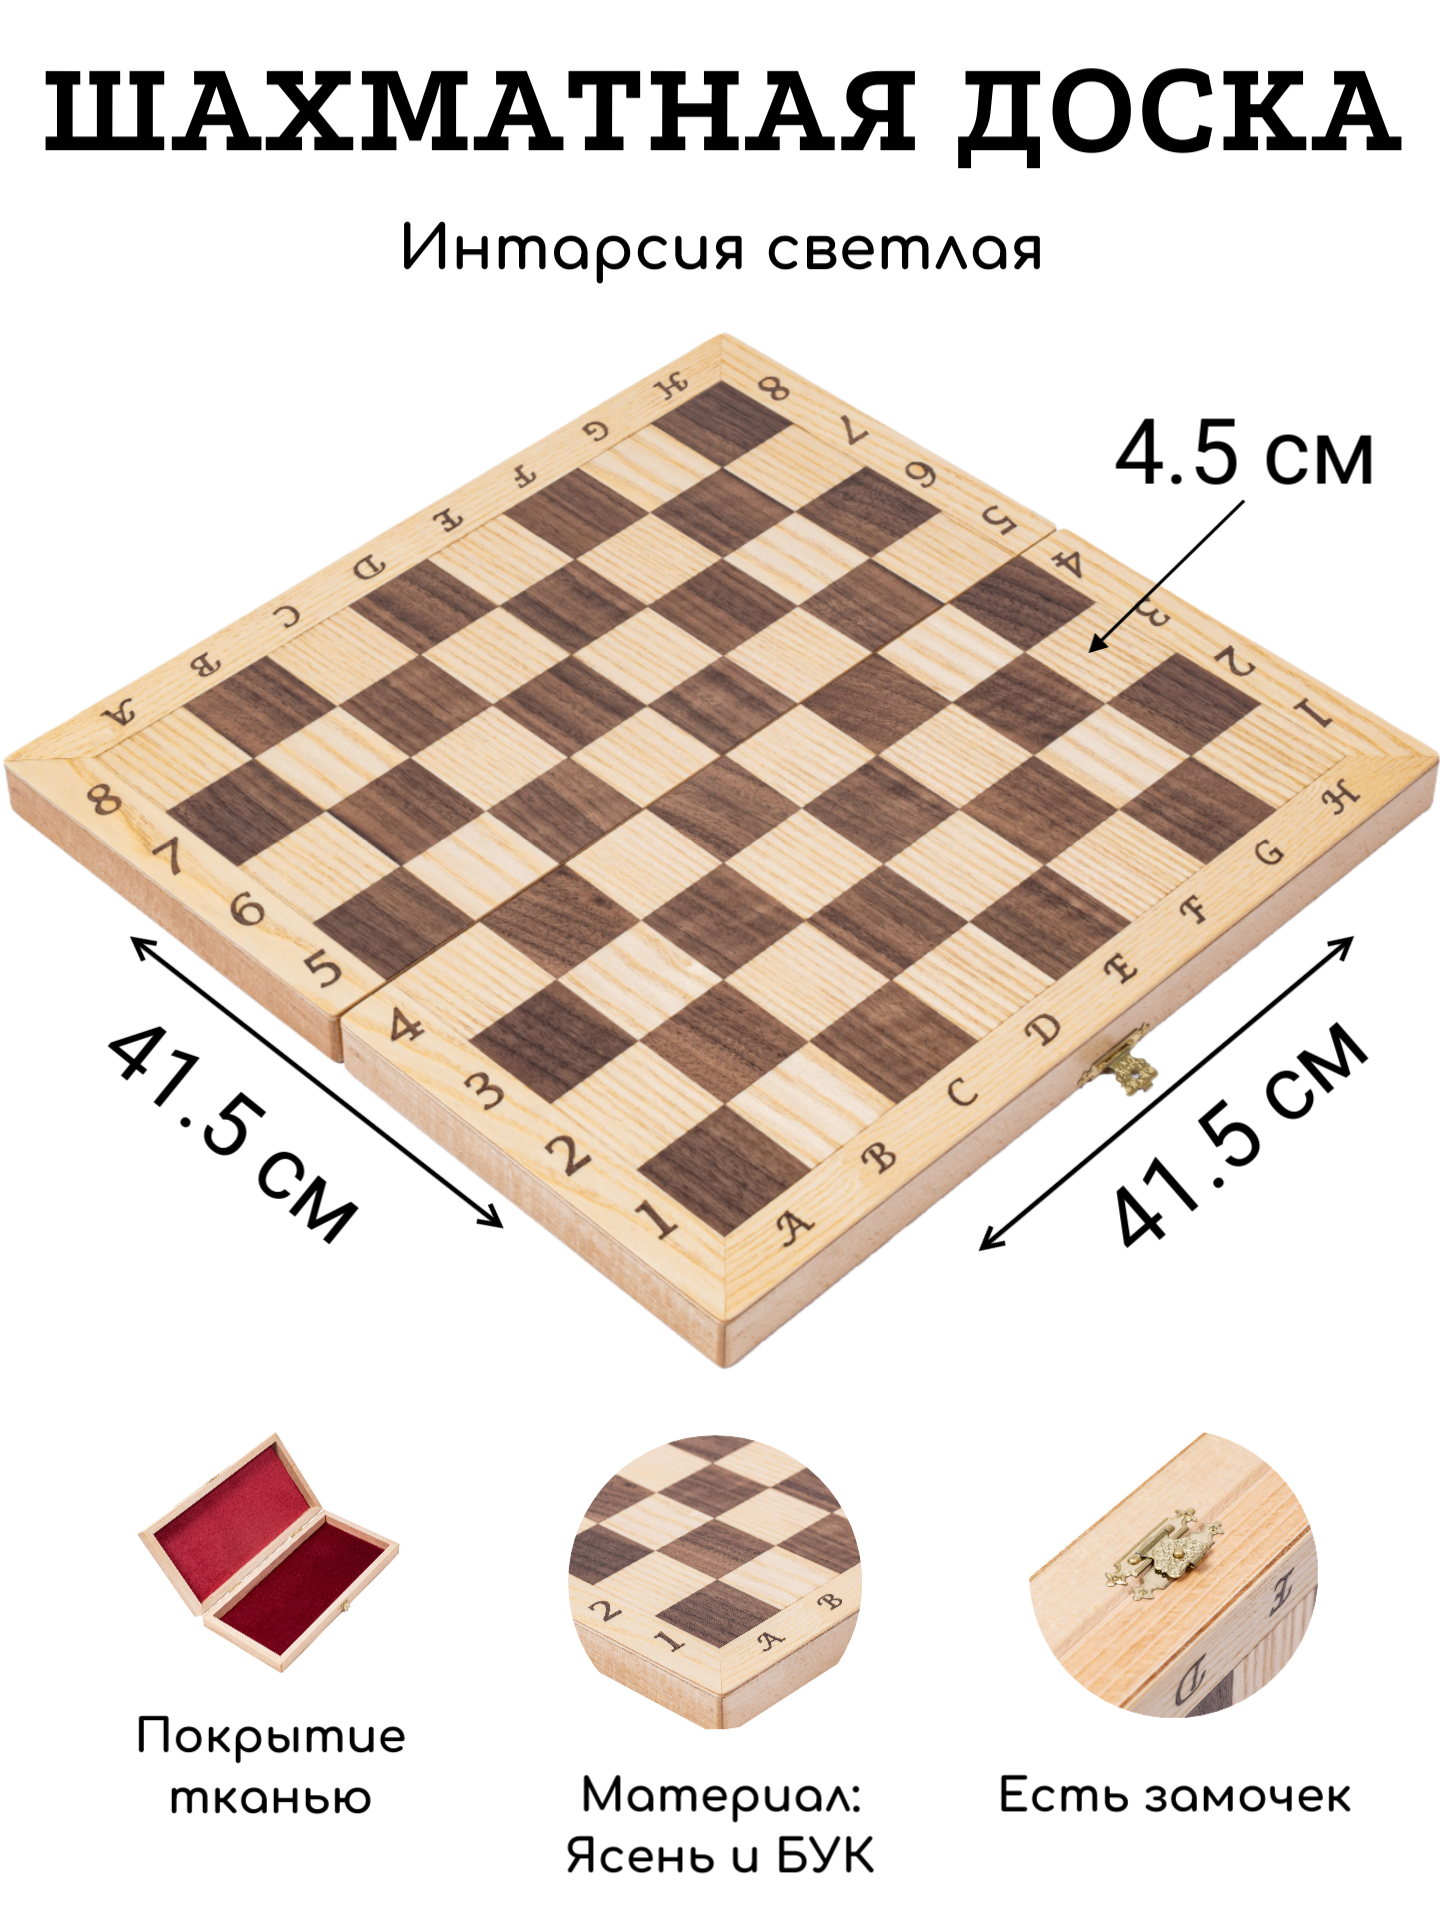 Шахматная доска без фигур Lavochkashop Турнирная 41 5 см интарсия stav042 чудо чемодан доска знаний магн гриф доска фигур магн 123шт